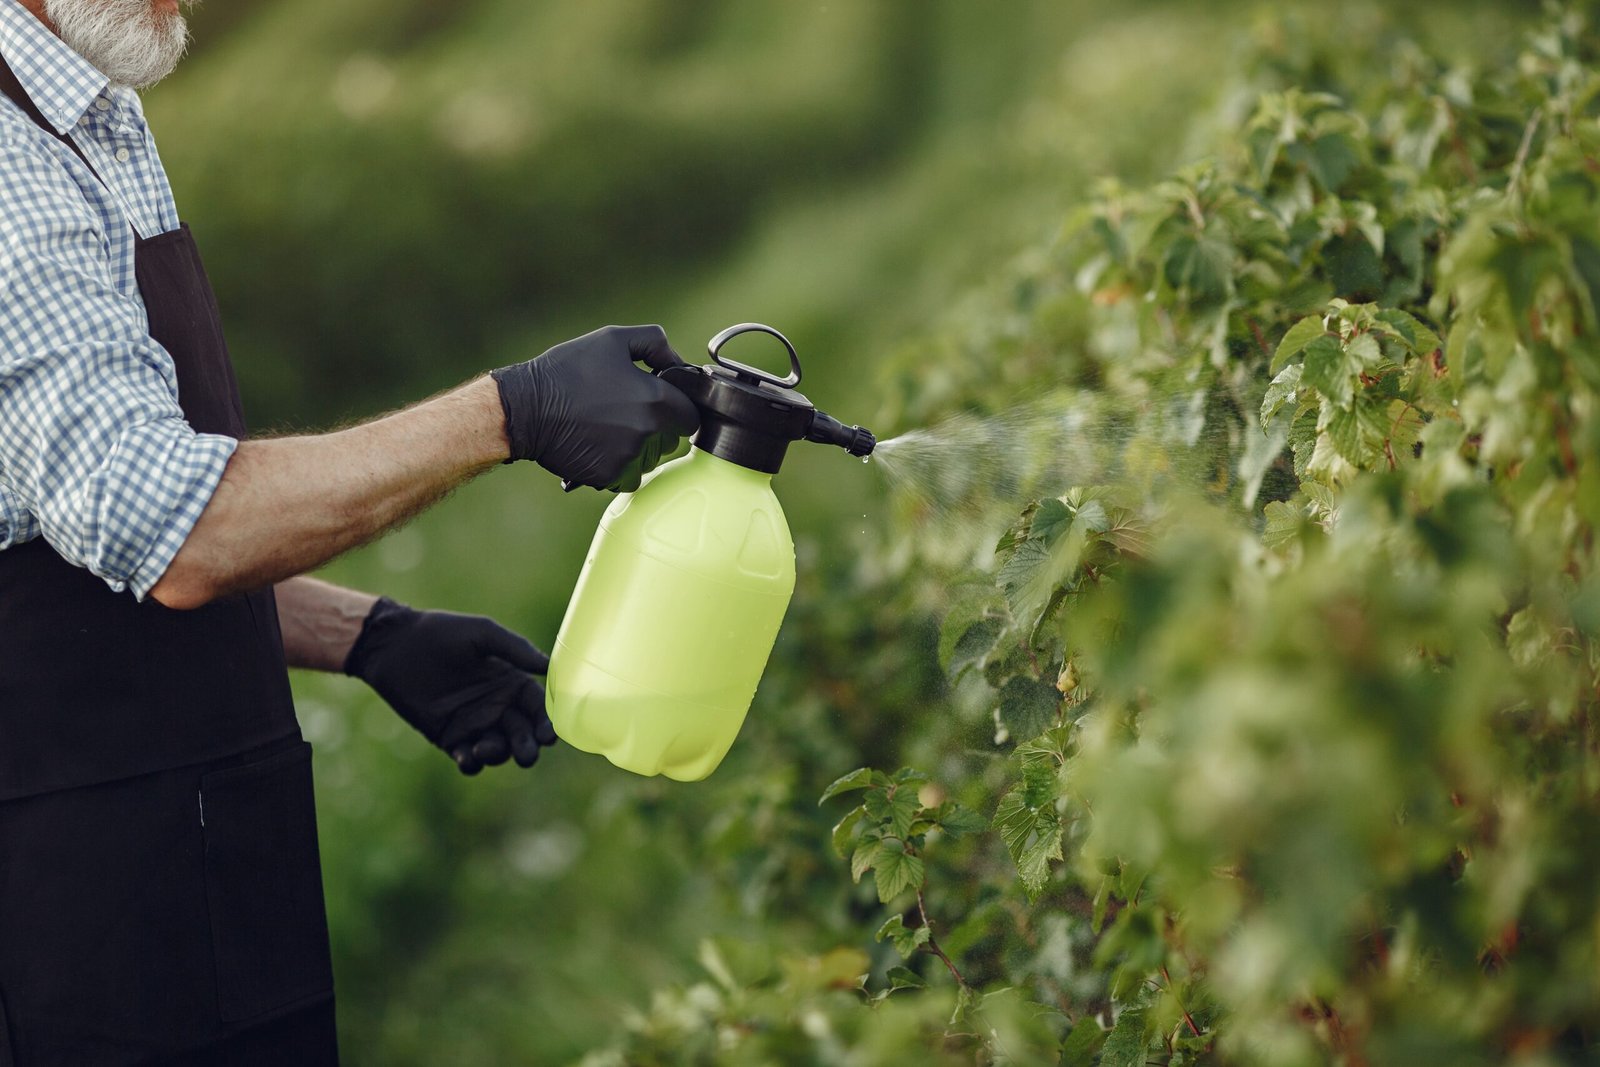 farmer-spraying-vegetables-garden-with-herbicides-man-black-apron-min-scaled.jpg